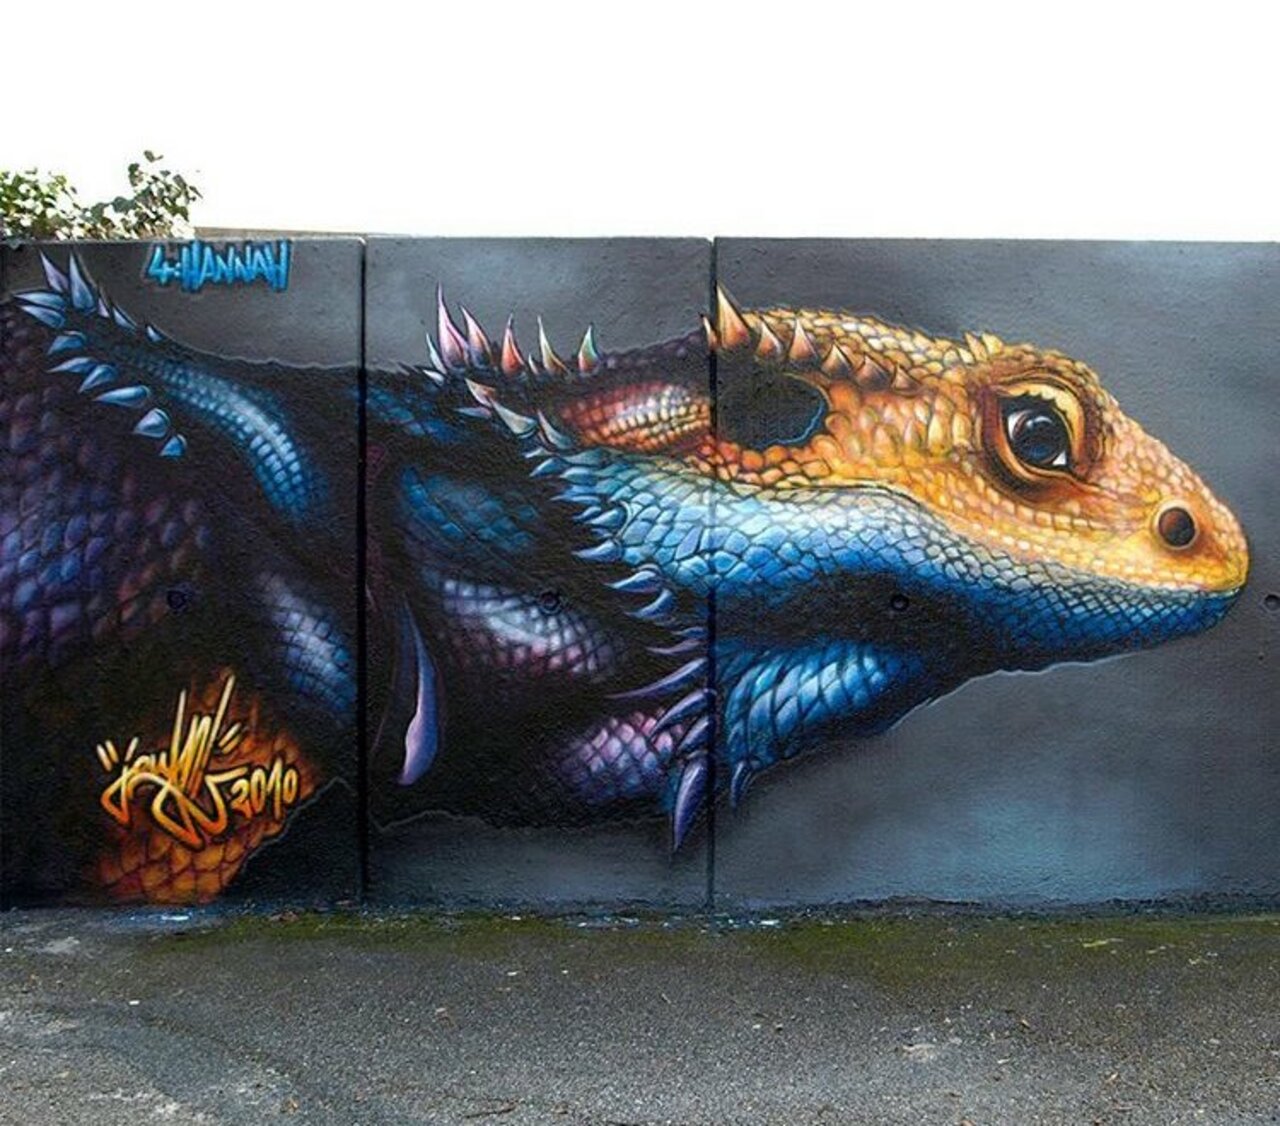 Street Art • Jayn one #art #mural #graffiti #streetart https://t.co/WoVfoSI2M8